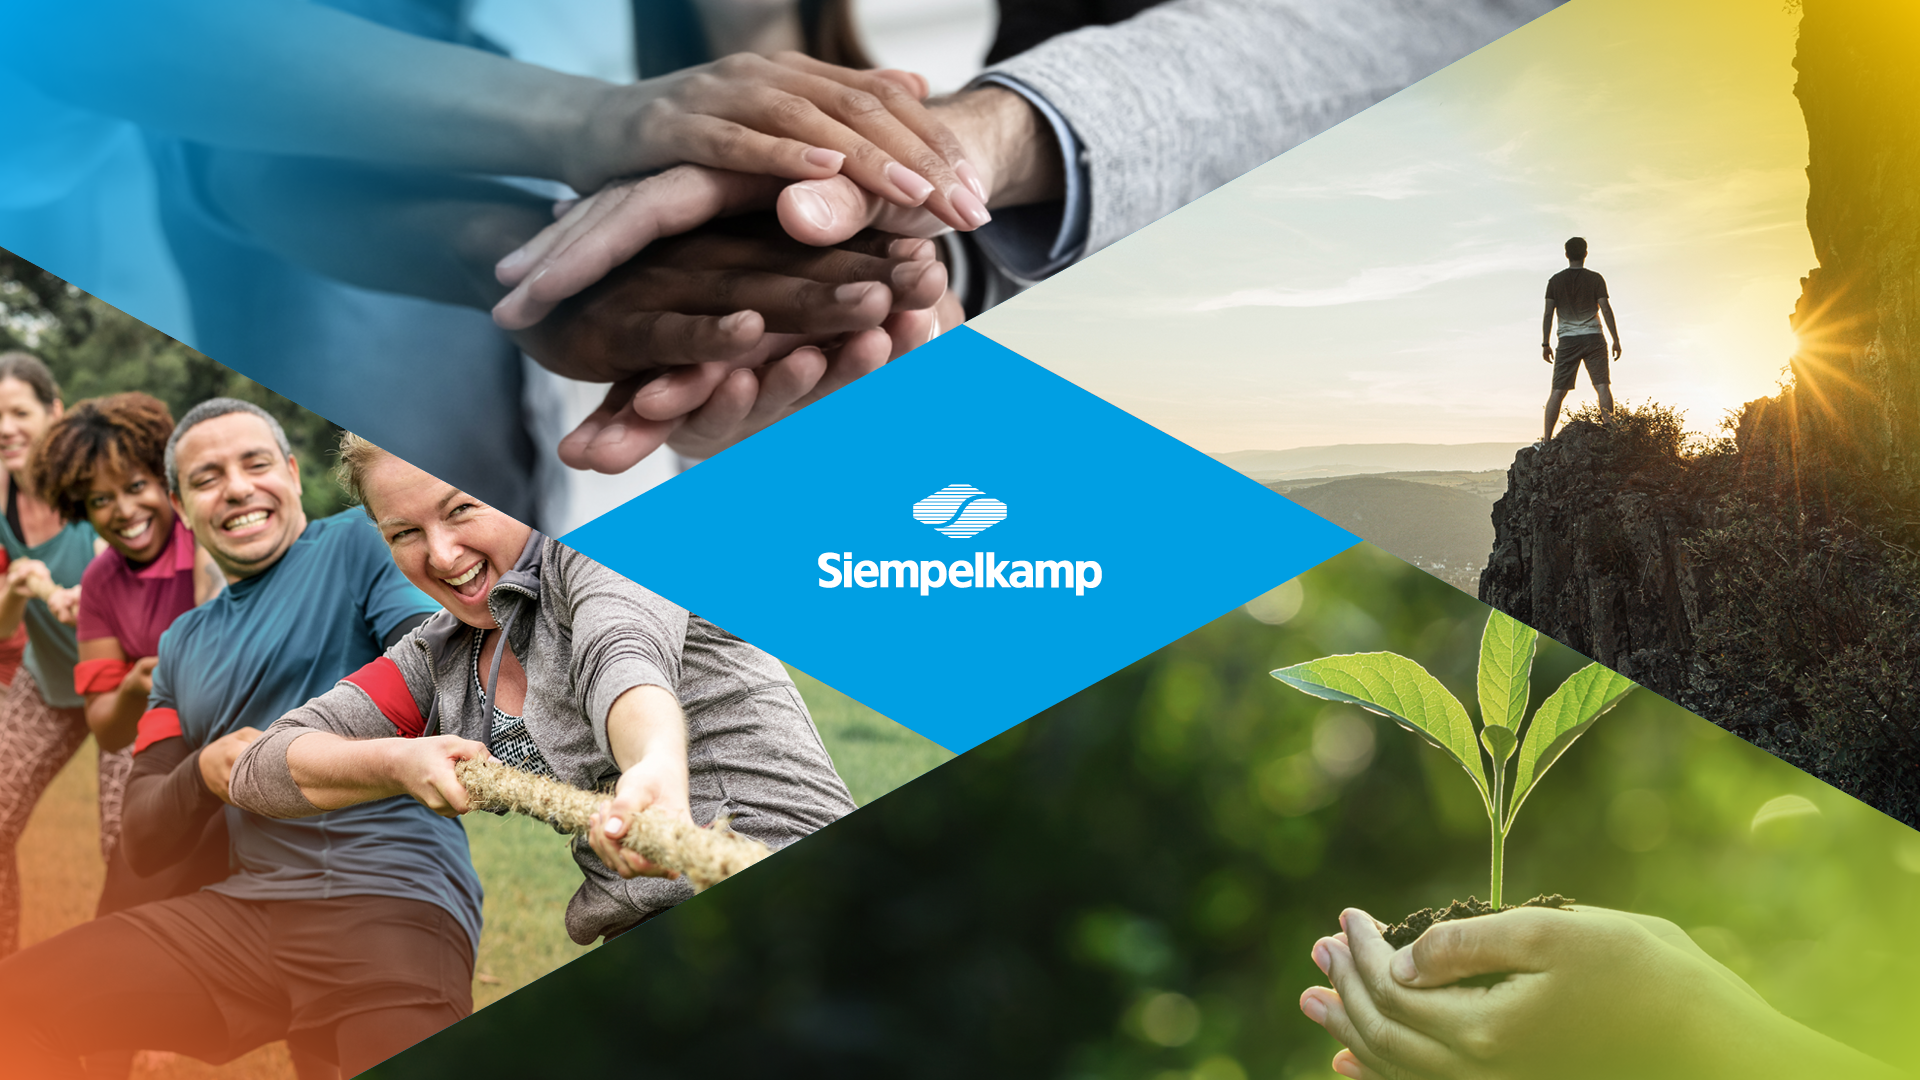 Siempelkamp - Our Management